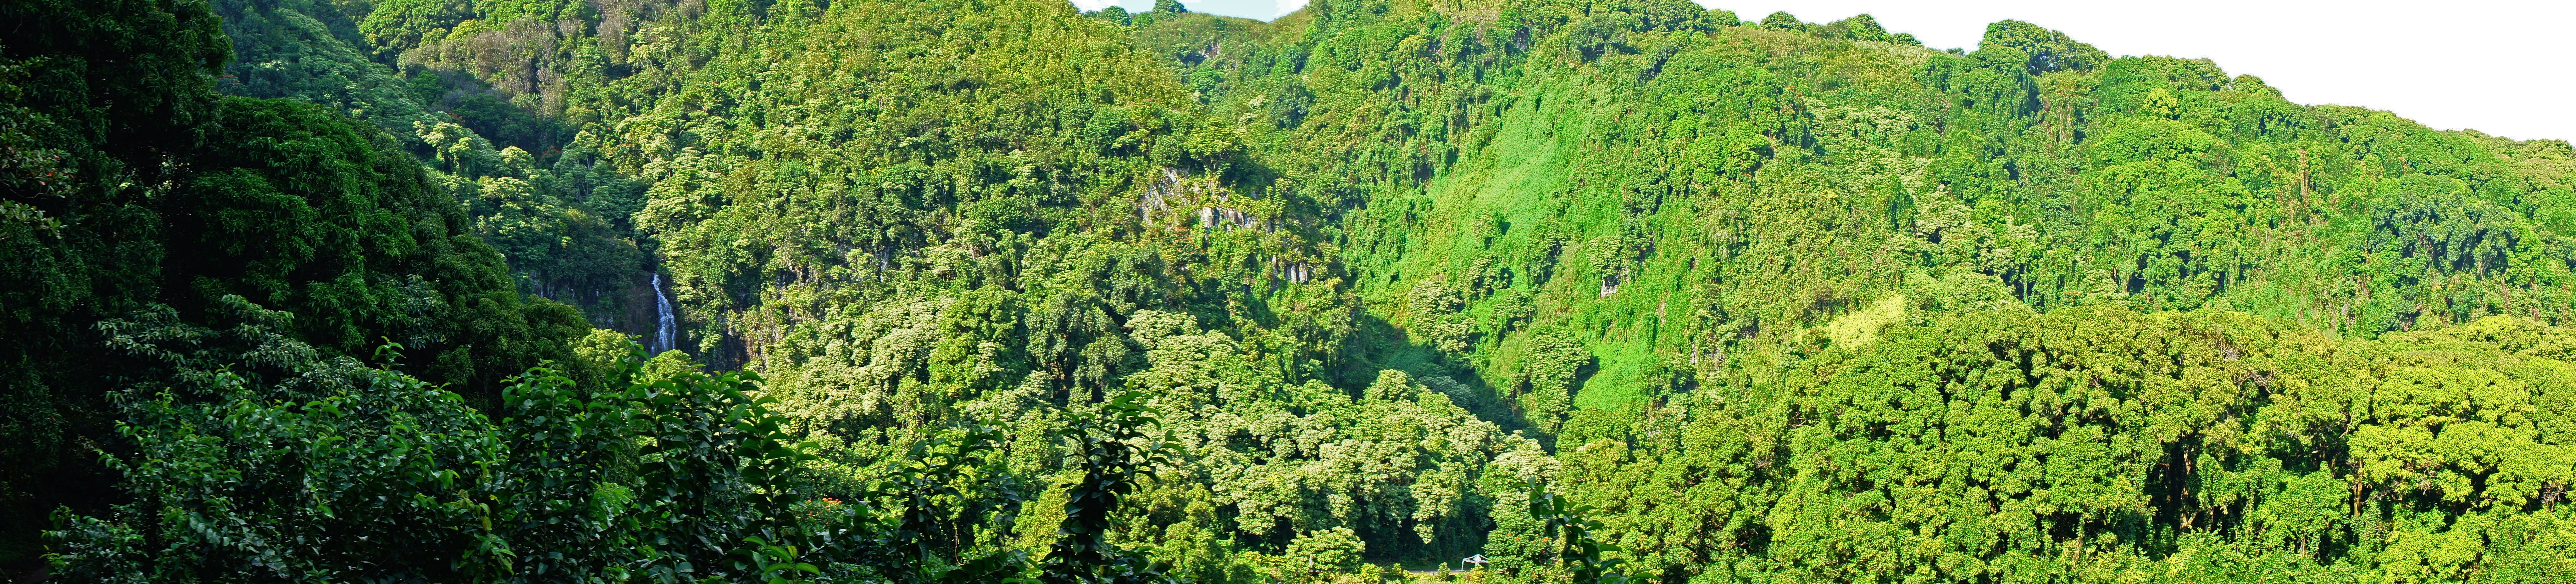 Hawaii Maui Tropical Forest Tropics Palm Trees Beach 8192x1856